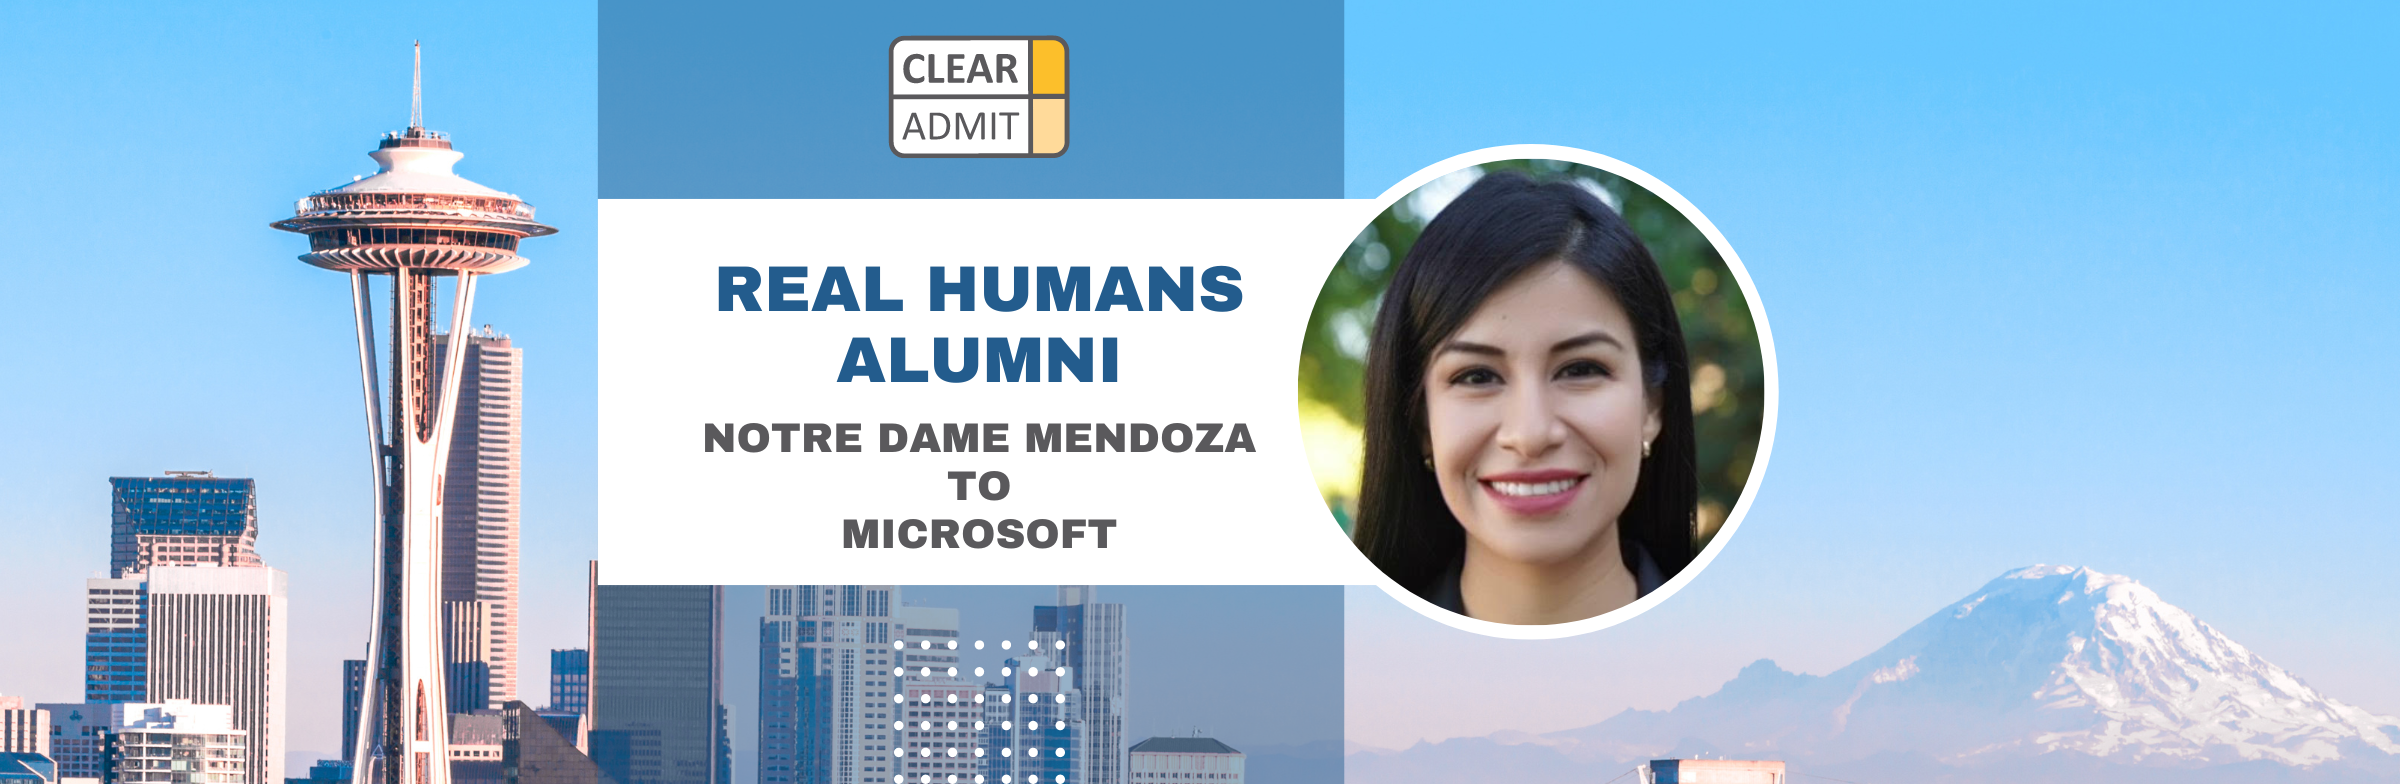 Image for Real Humans of Microsoft: Claudia Santa Cruz, Notre Dame Mendoza MBA ’21, Senior Sales Specialist